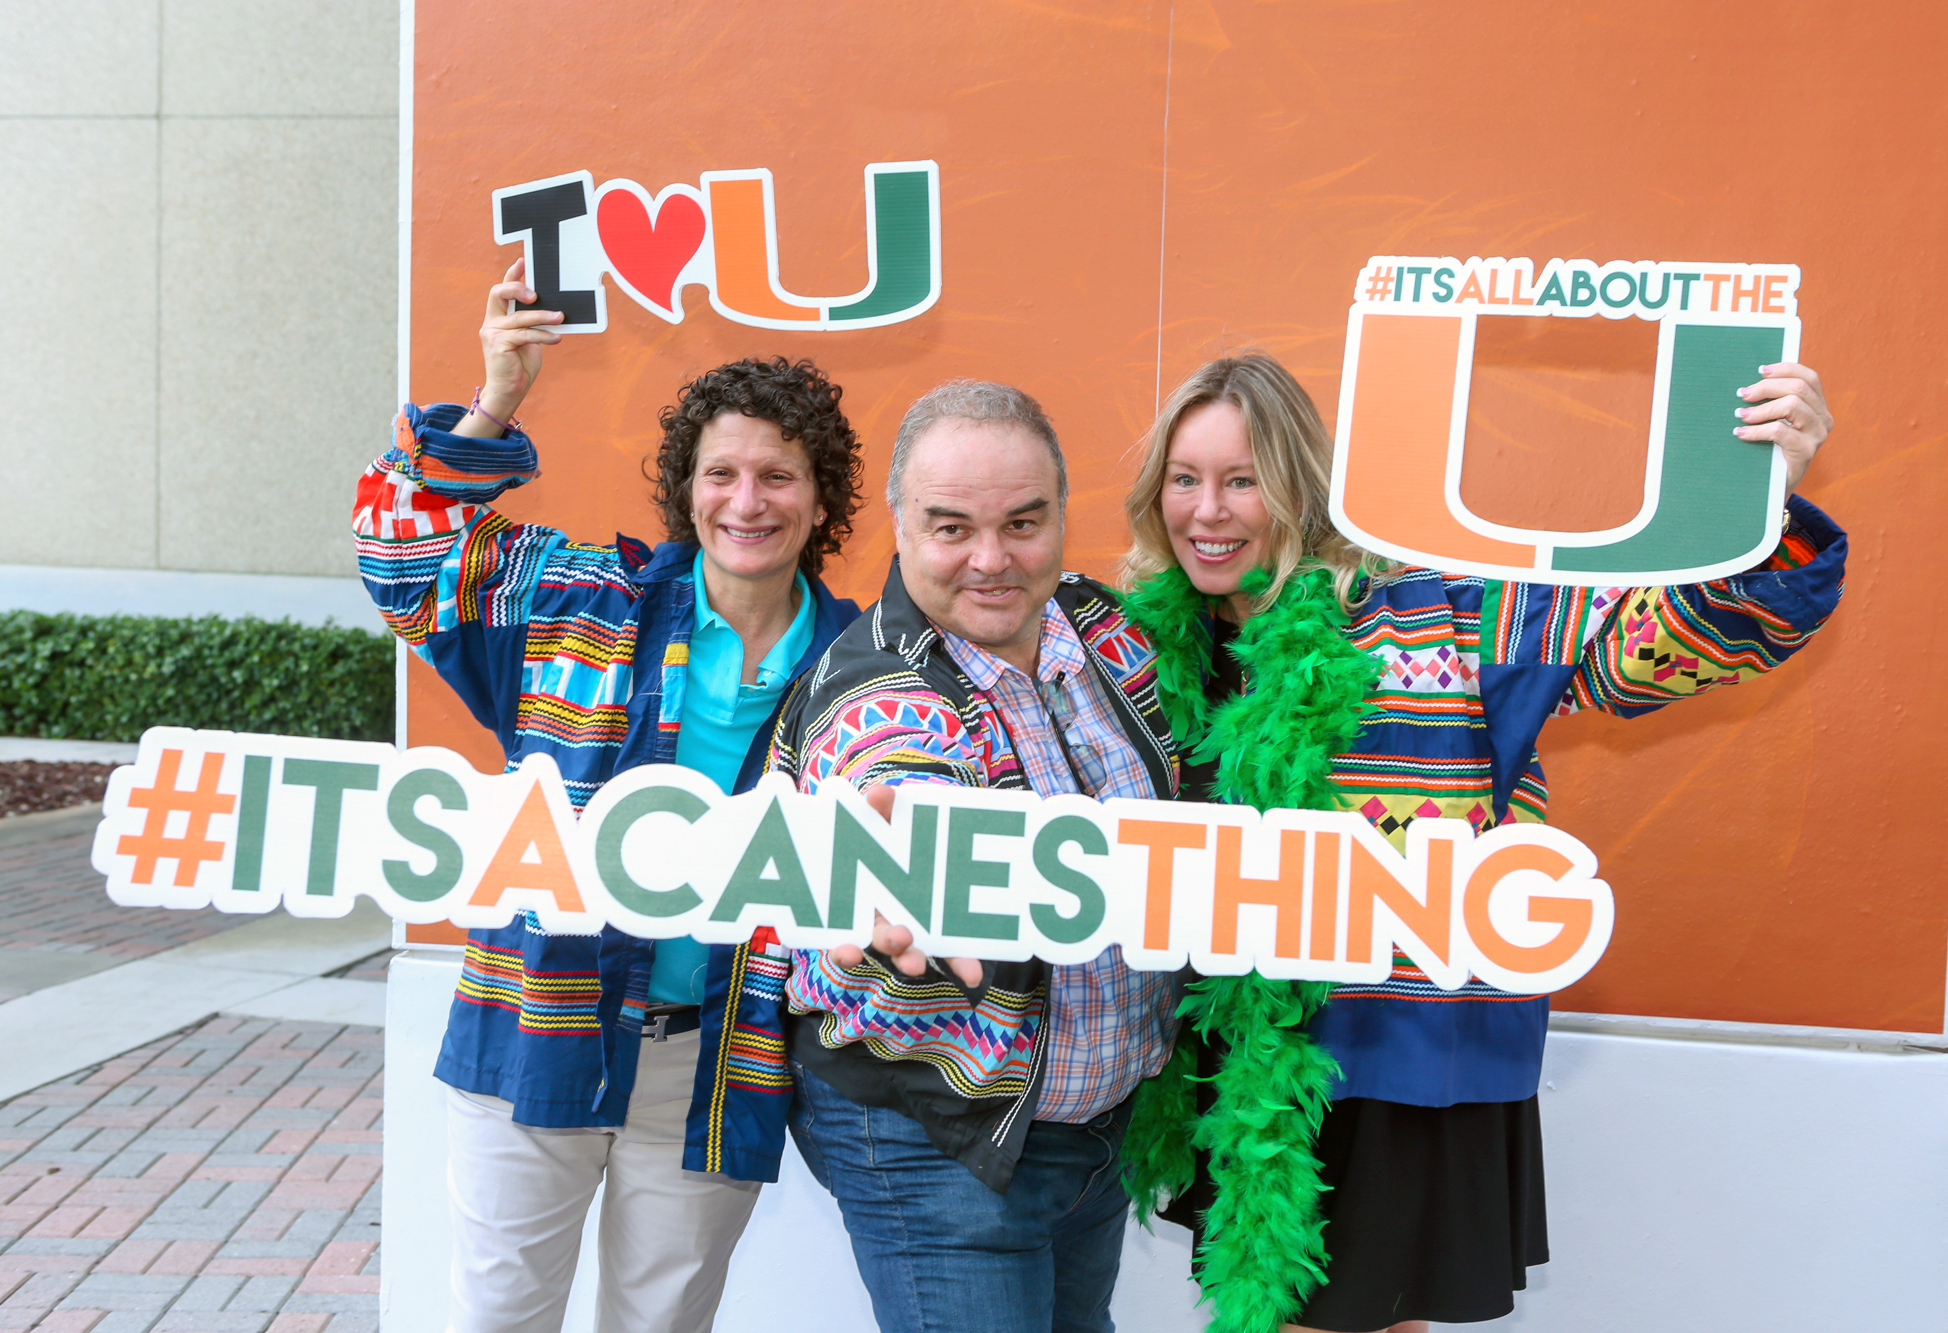 Miami Herbert alumni dressed in orange and green celebrating homecoming.